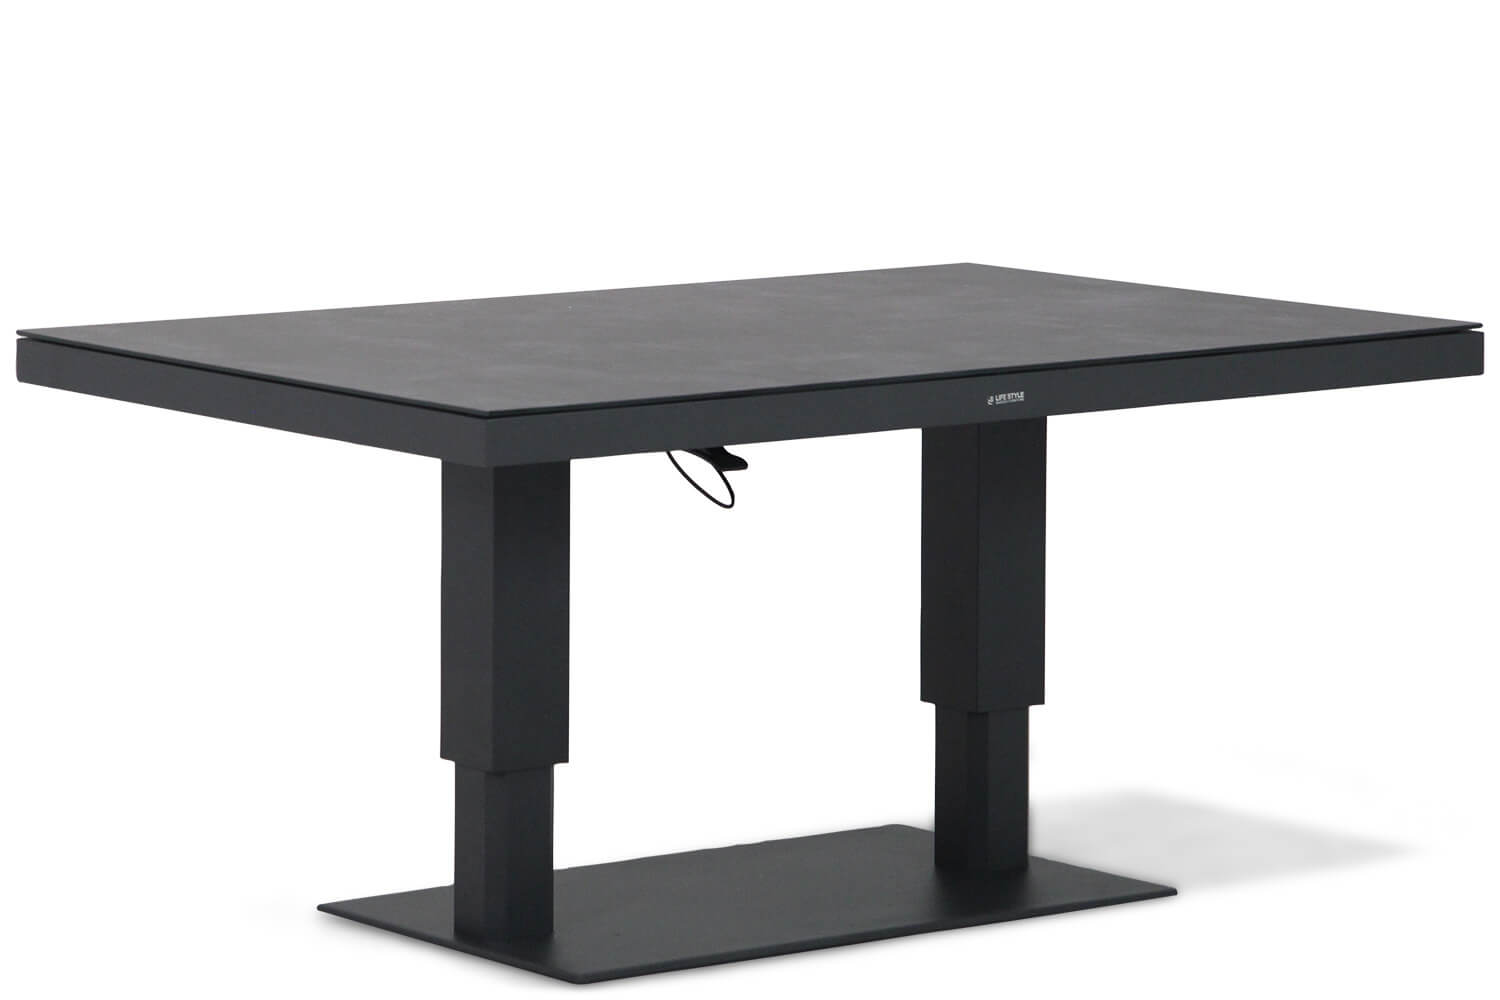 Lifestyle Versatile in hoogte verstelbare tafel 140x80cm